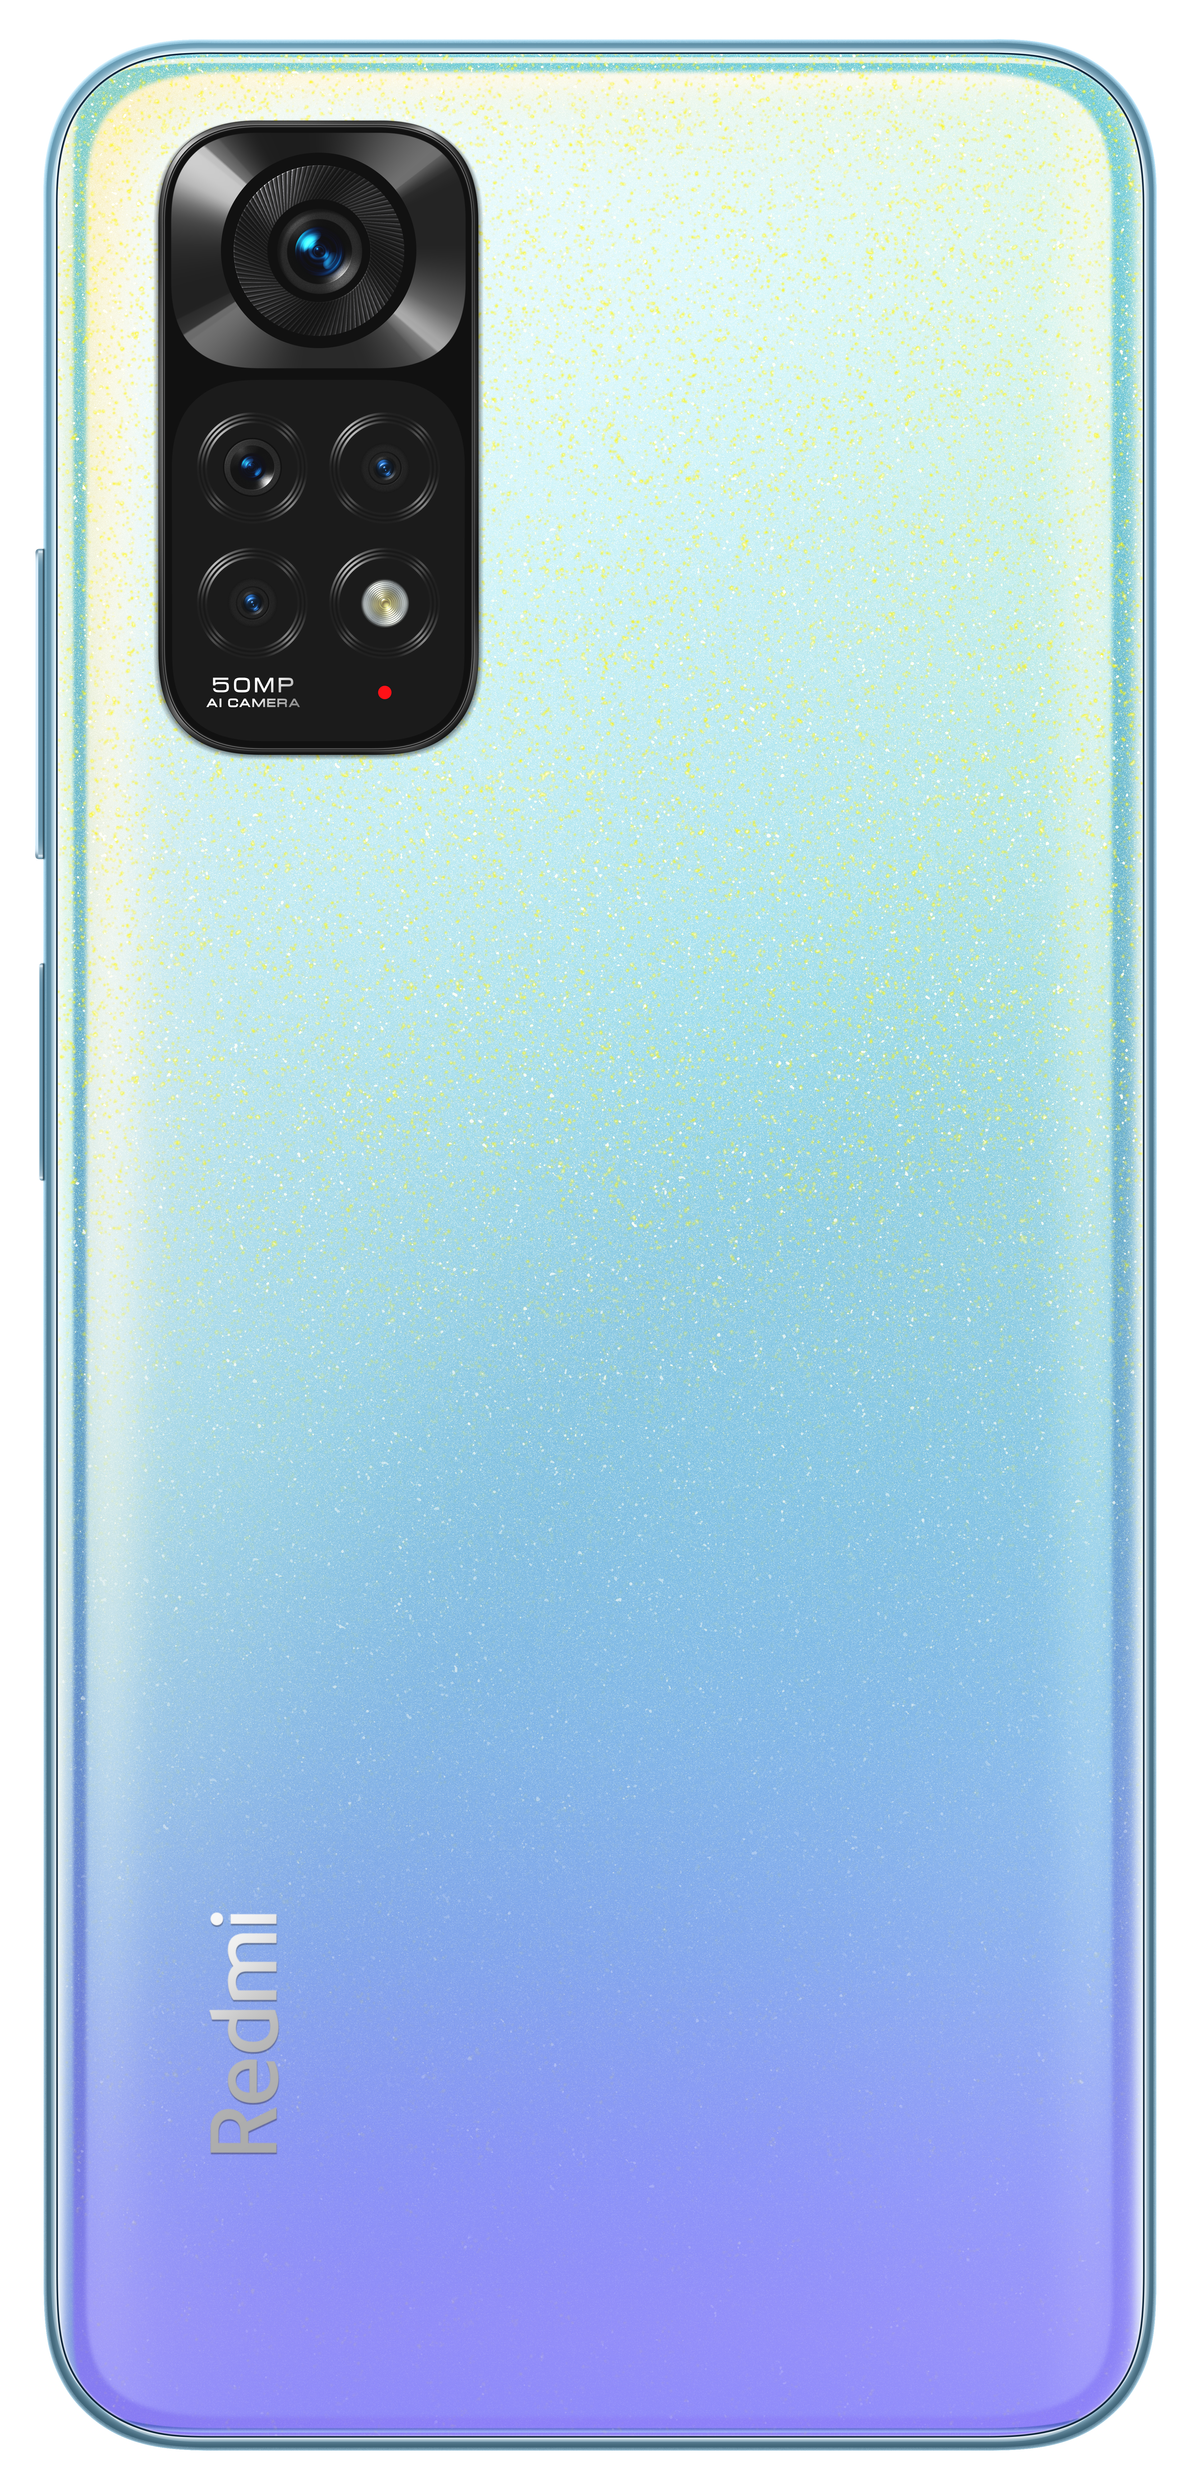 XIAOMI Star NFC SIM 11 NOTE GB BLUE 64 Dual Blue STAR 4+64 REDMI